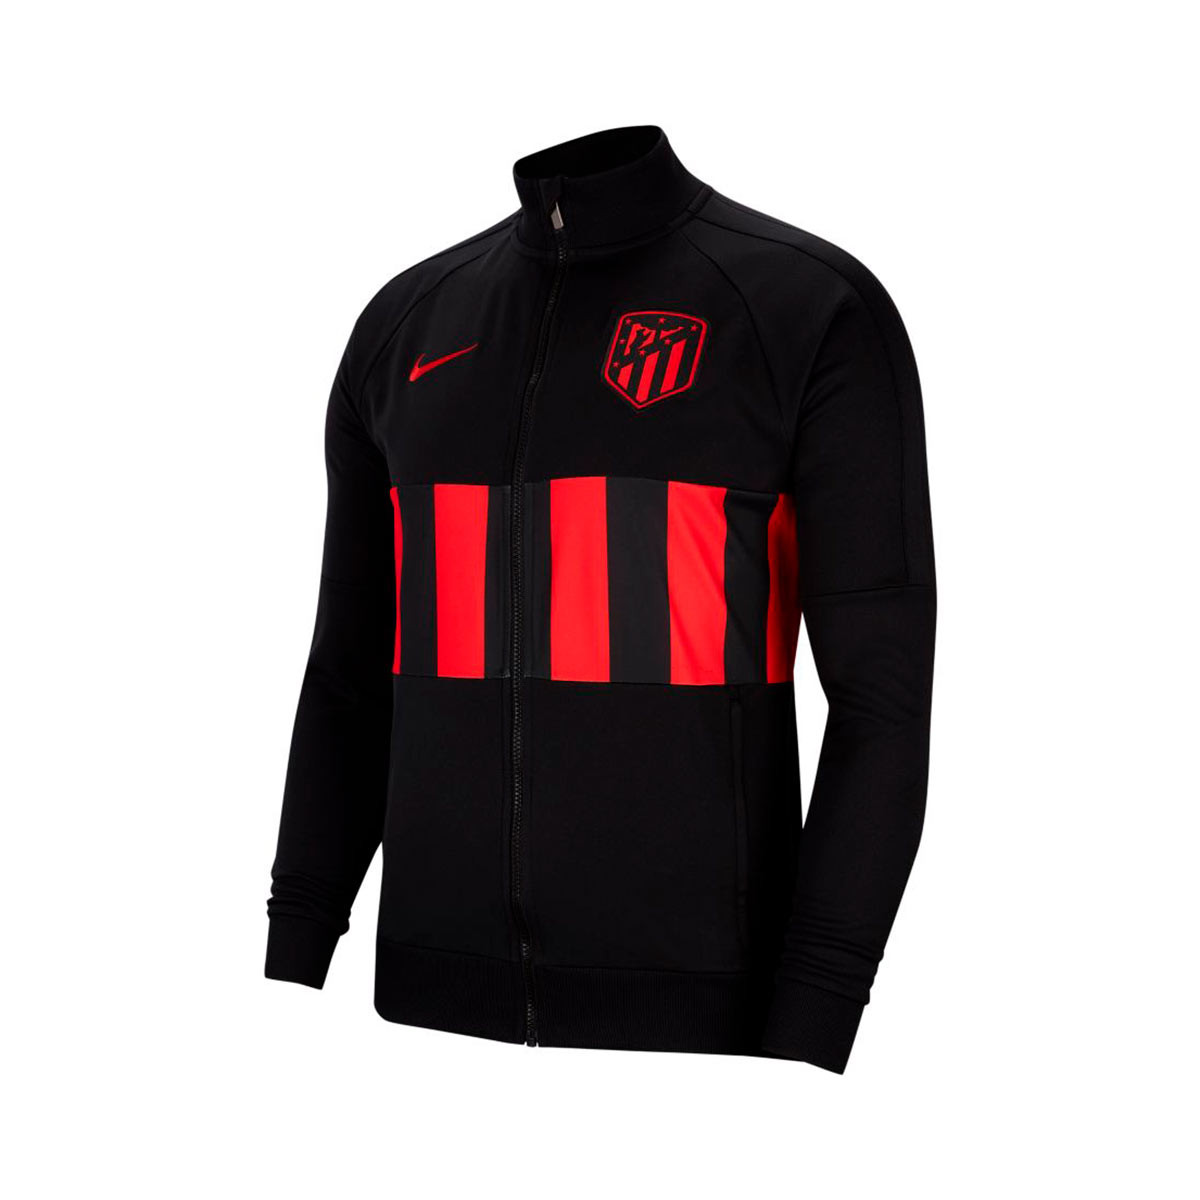 Chaqueta Nike Atletico de Madrid I96 2019-2020 Black-White-Challenge red -  Tienda de fútbol Fútbol Emotion